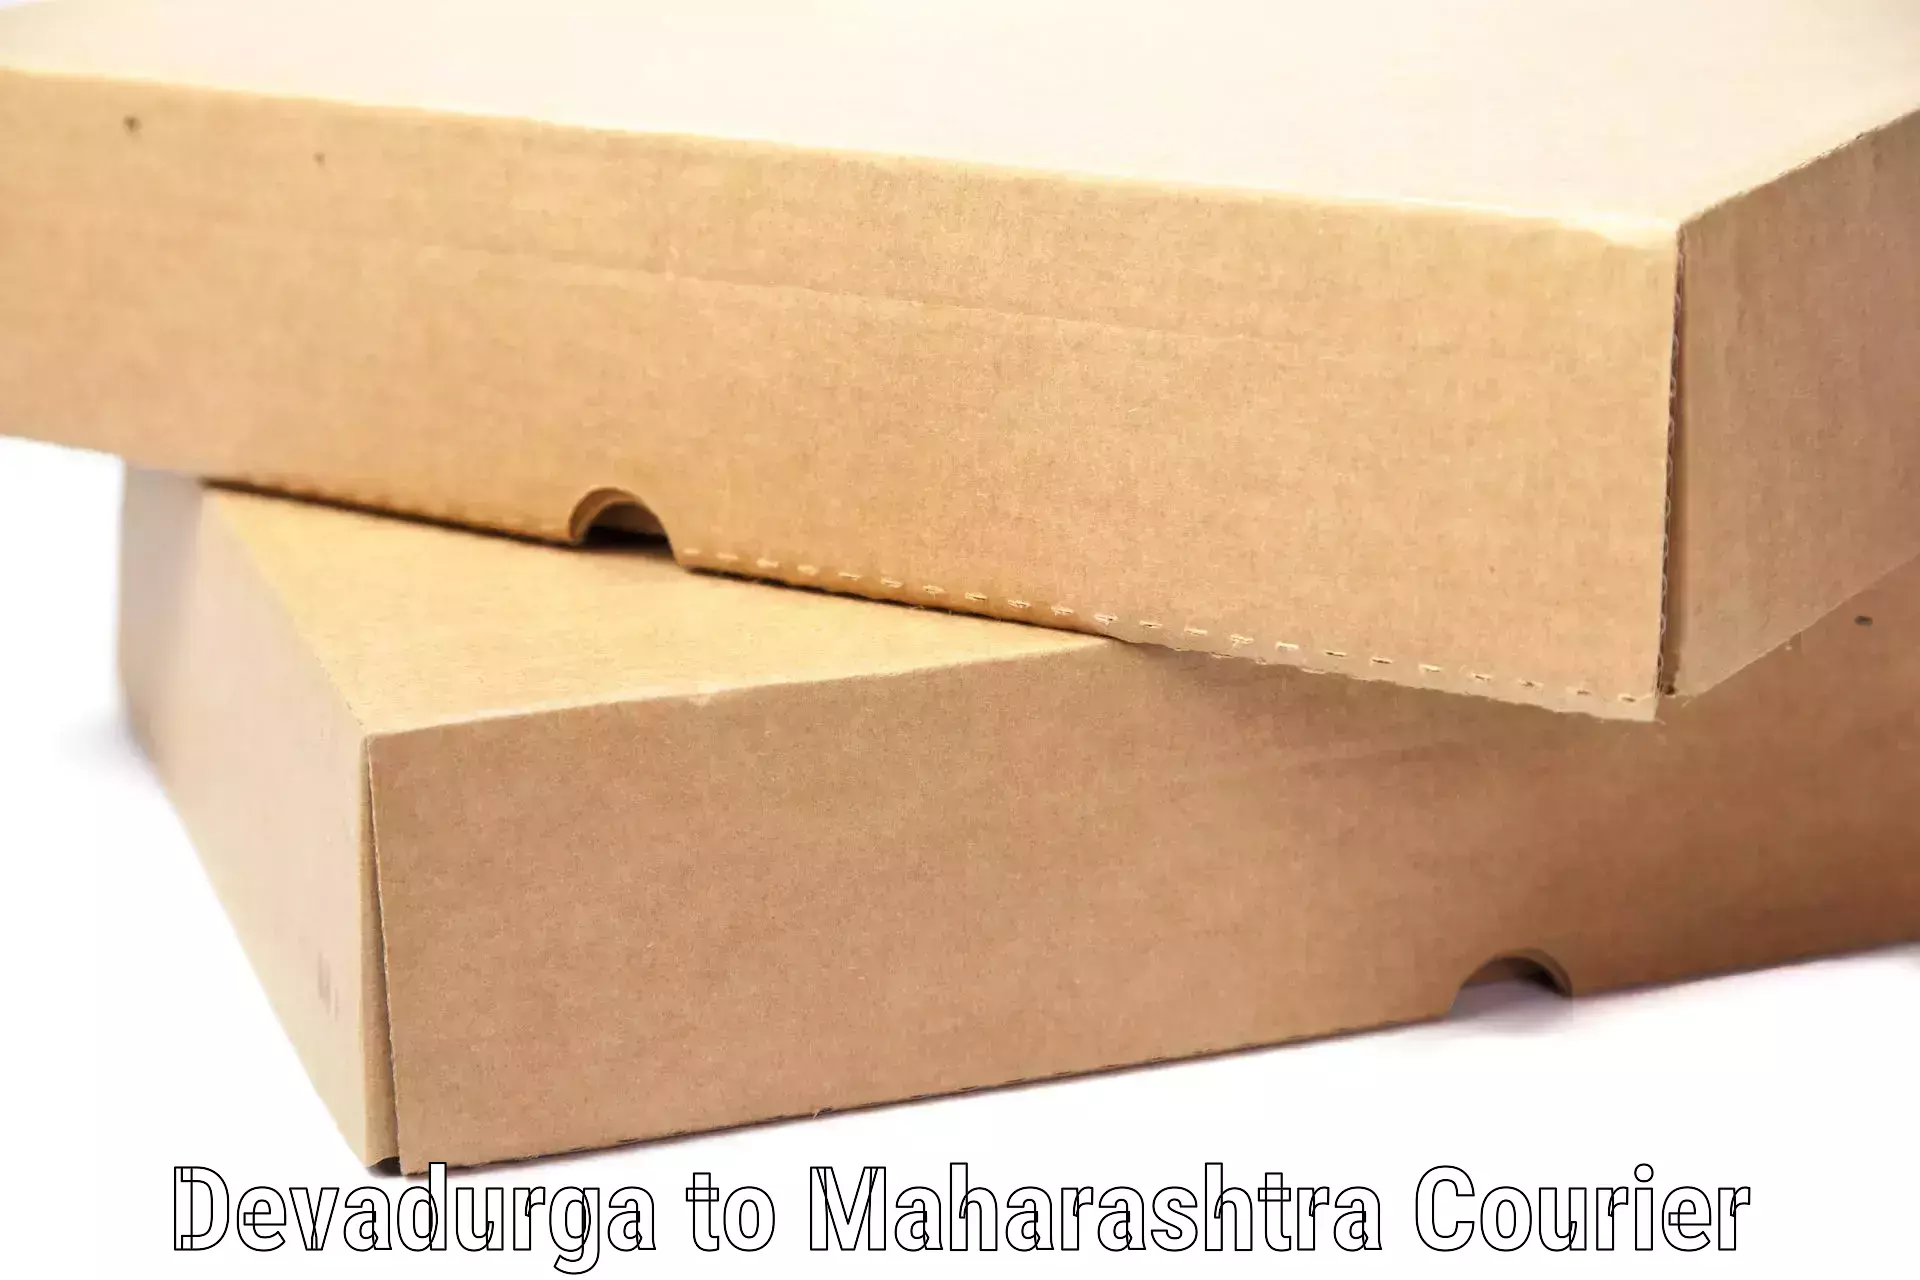 Emergency baggage service Devadurga to Maharashtra